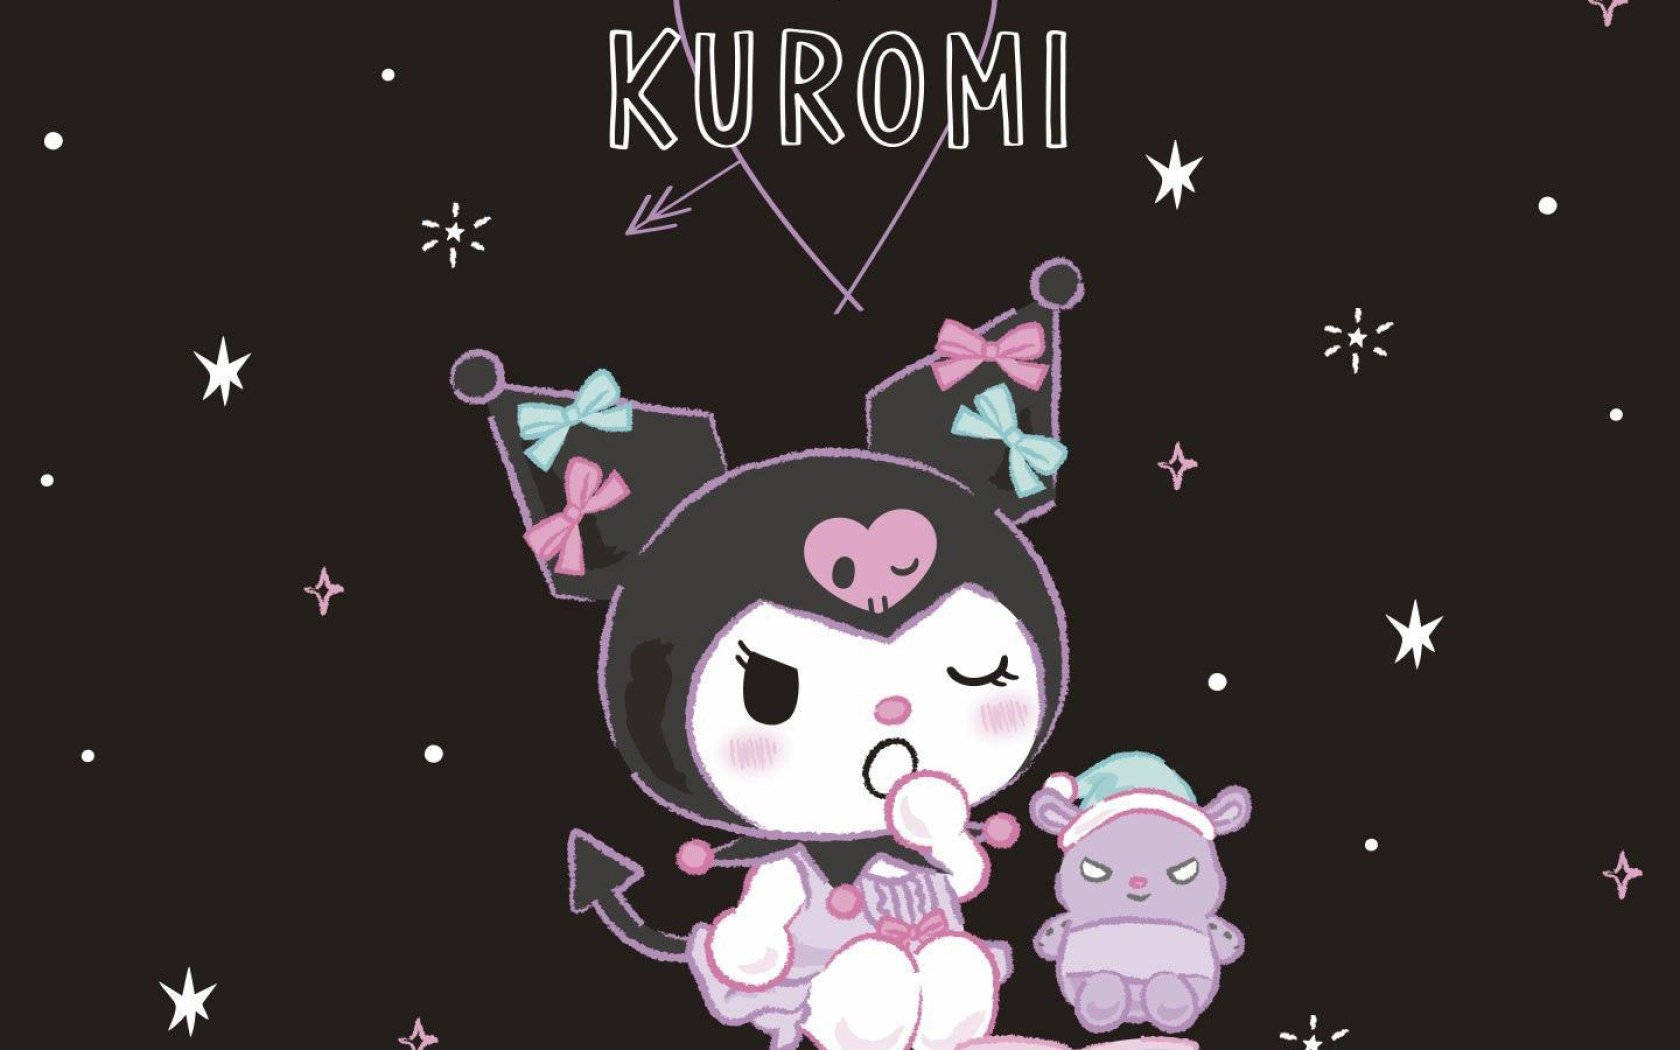 Free Kuromi Wallpaper Downloads, Kuromi Wallpaper for FREE